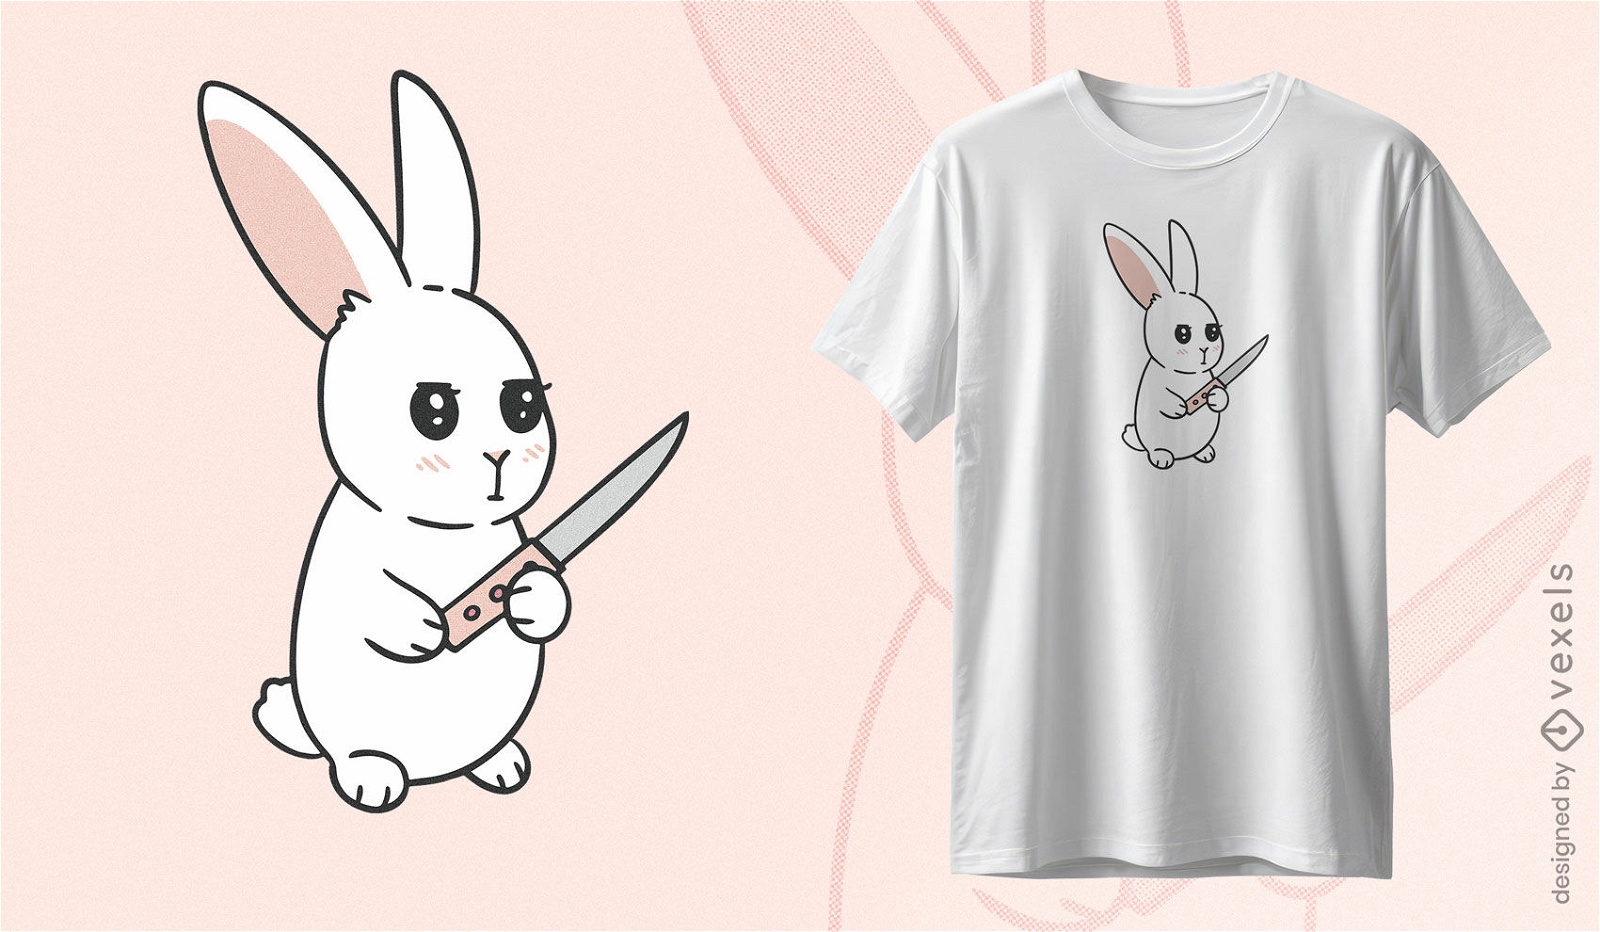 Menacing bunny t-shirt design